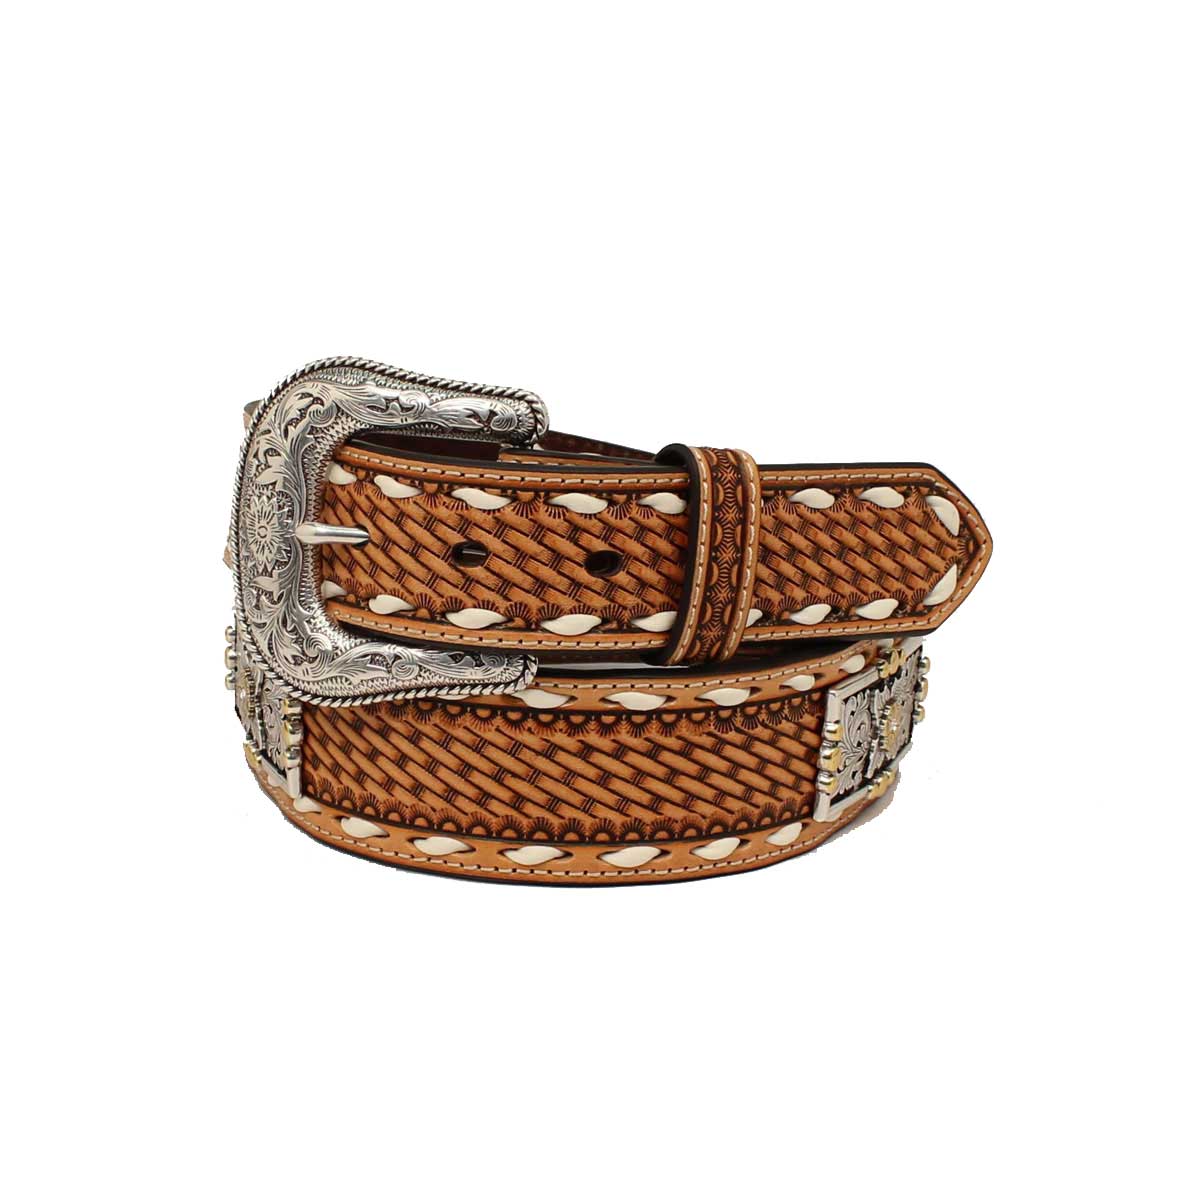 Nocona Men's Tan Leather Basket Weave with Silver & Gold Conchos Western Belt